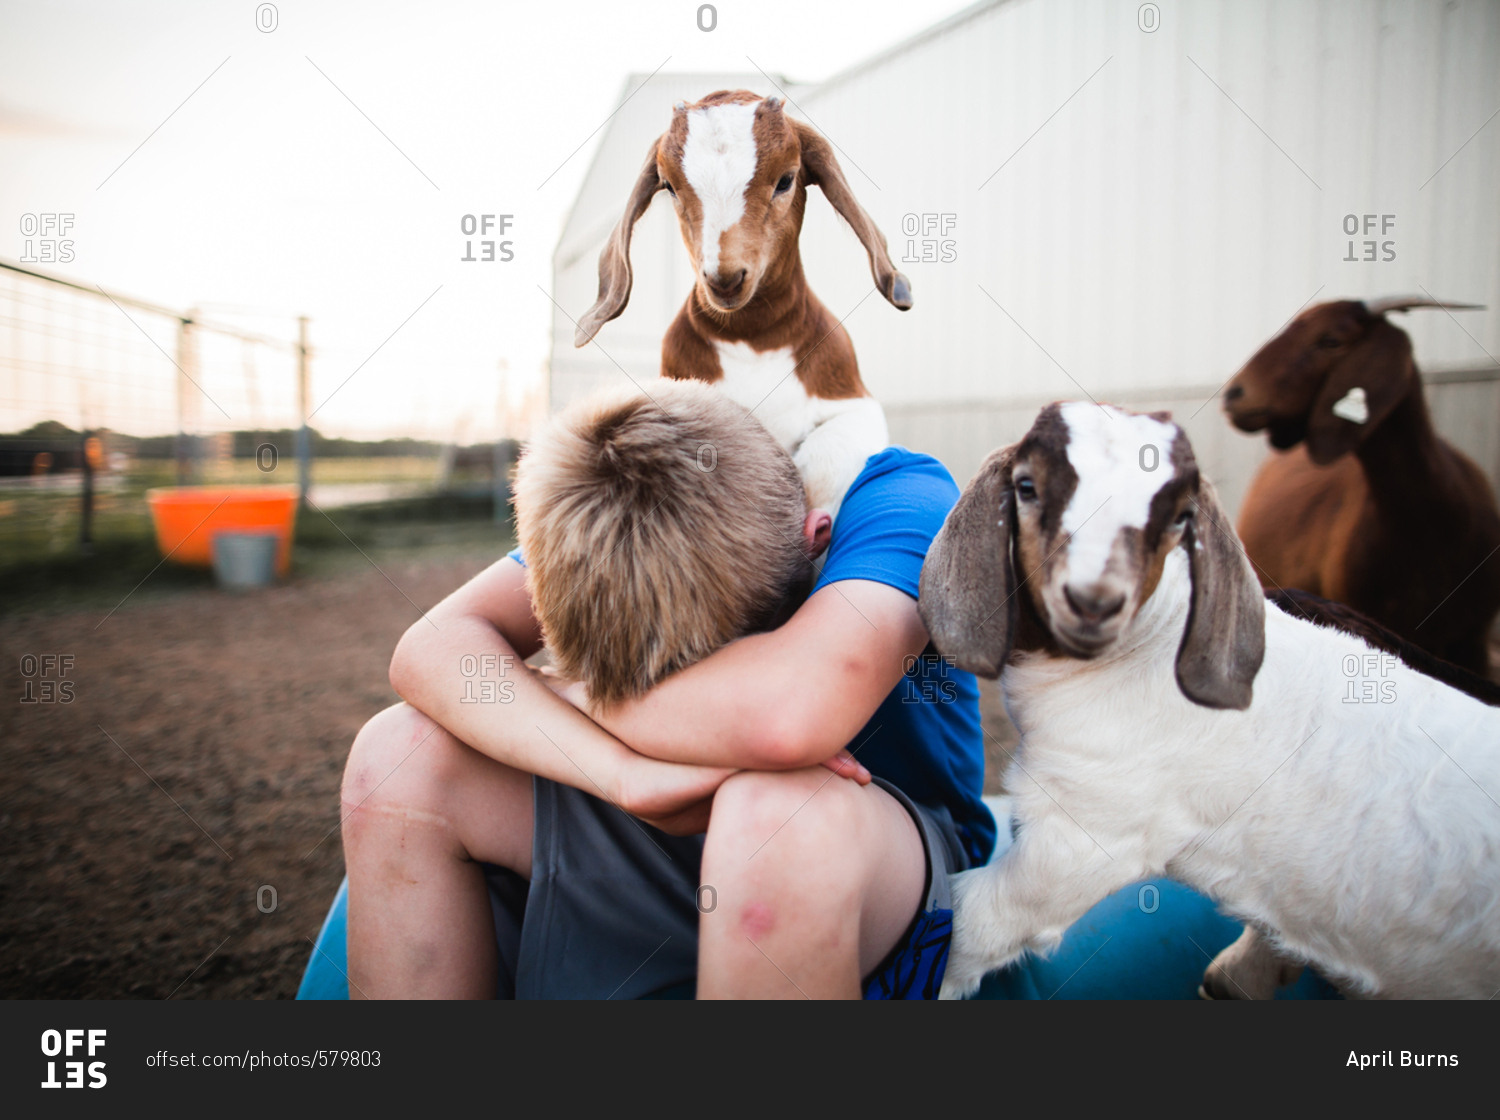 Baby goats climbing on a boy